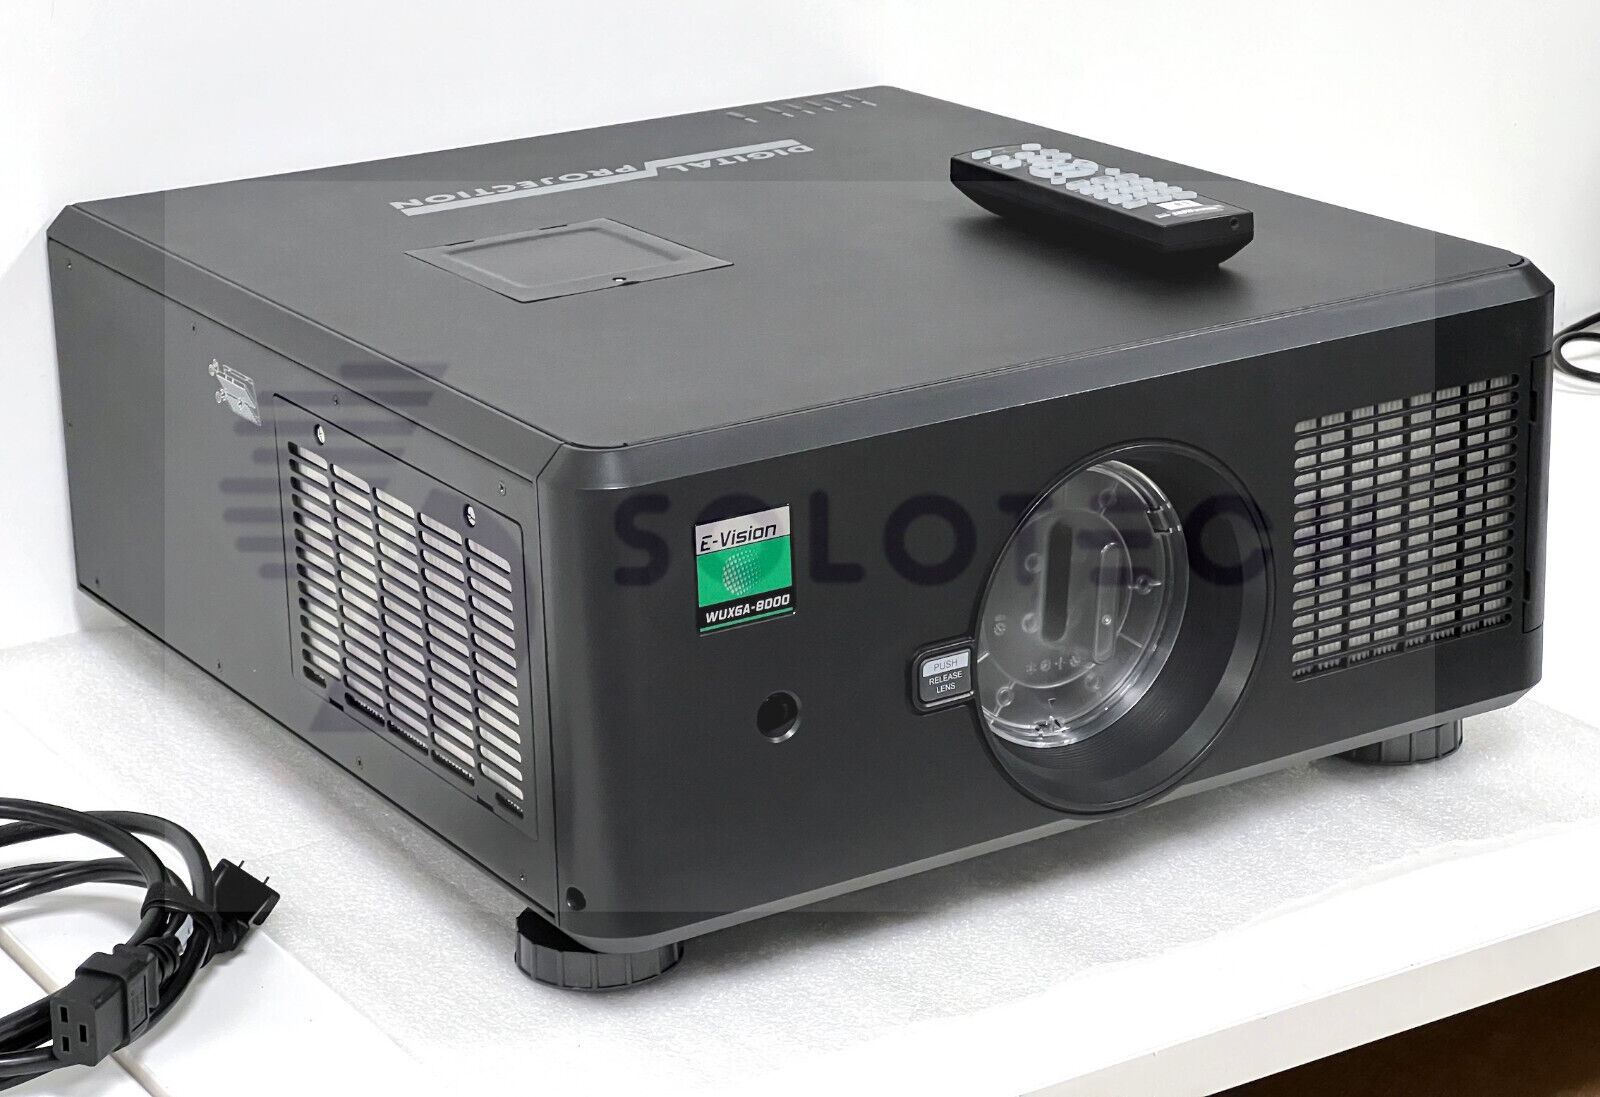 Digital Projection E-Vision WUXGA 8000 Projector, Large Venue Projector - #J28SL